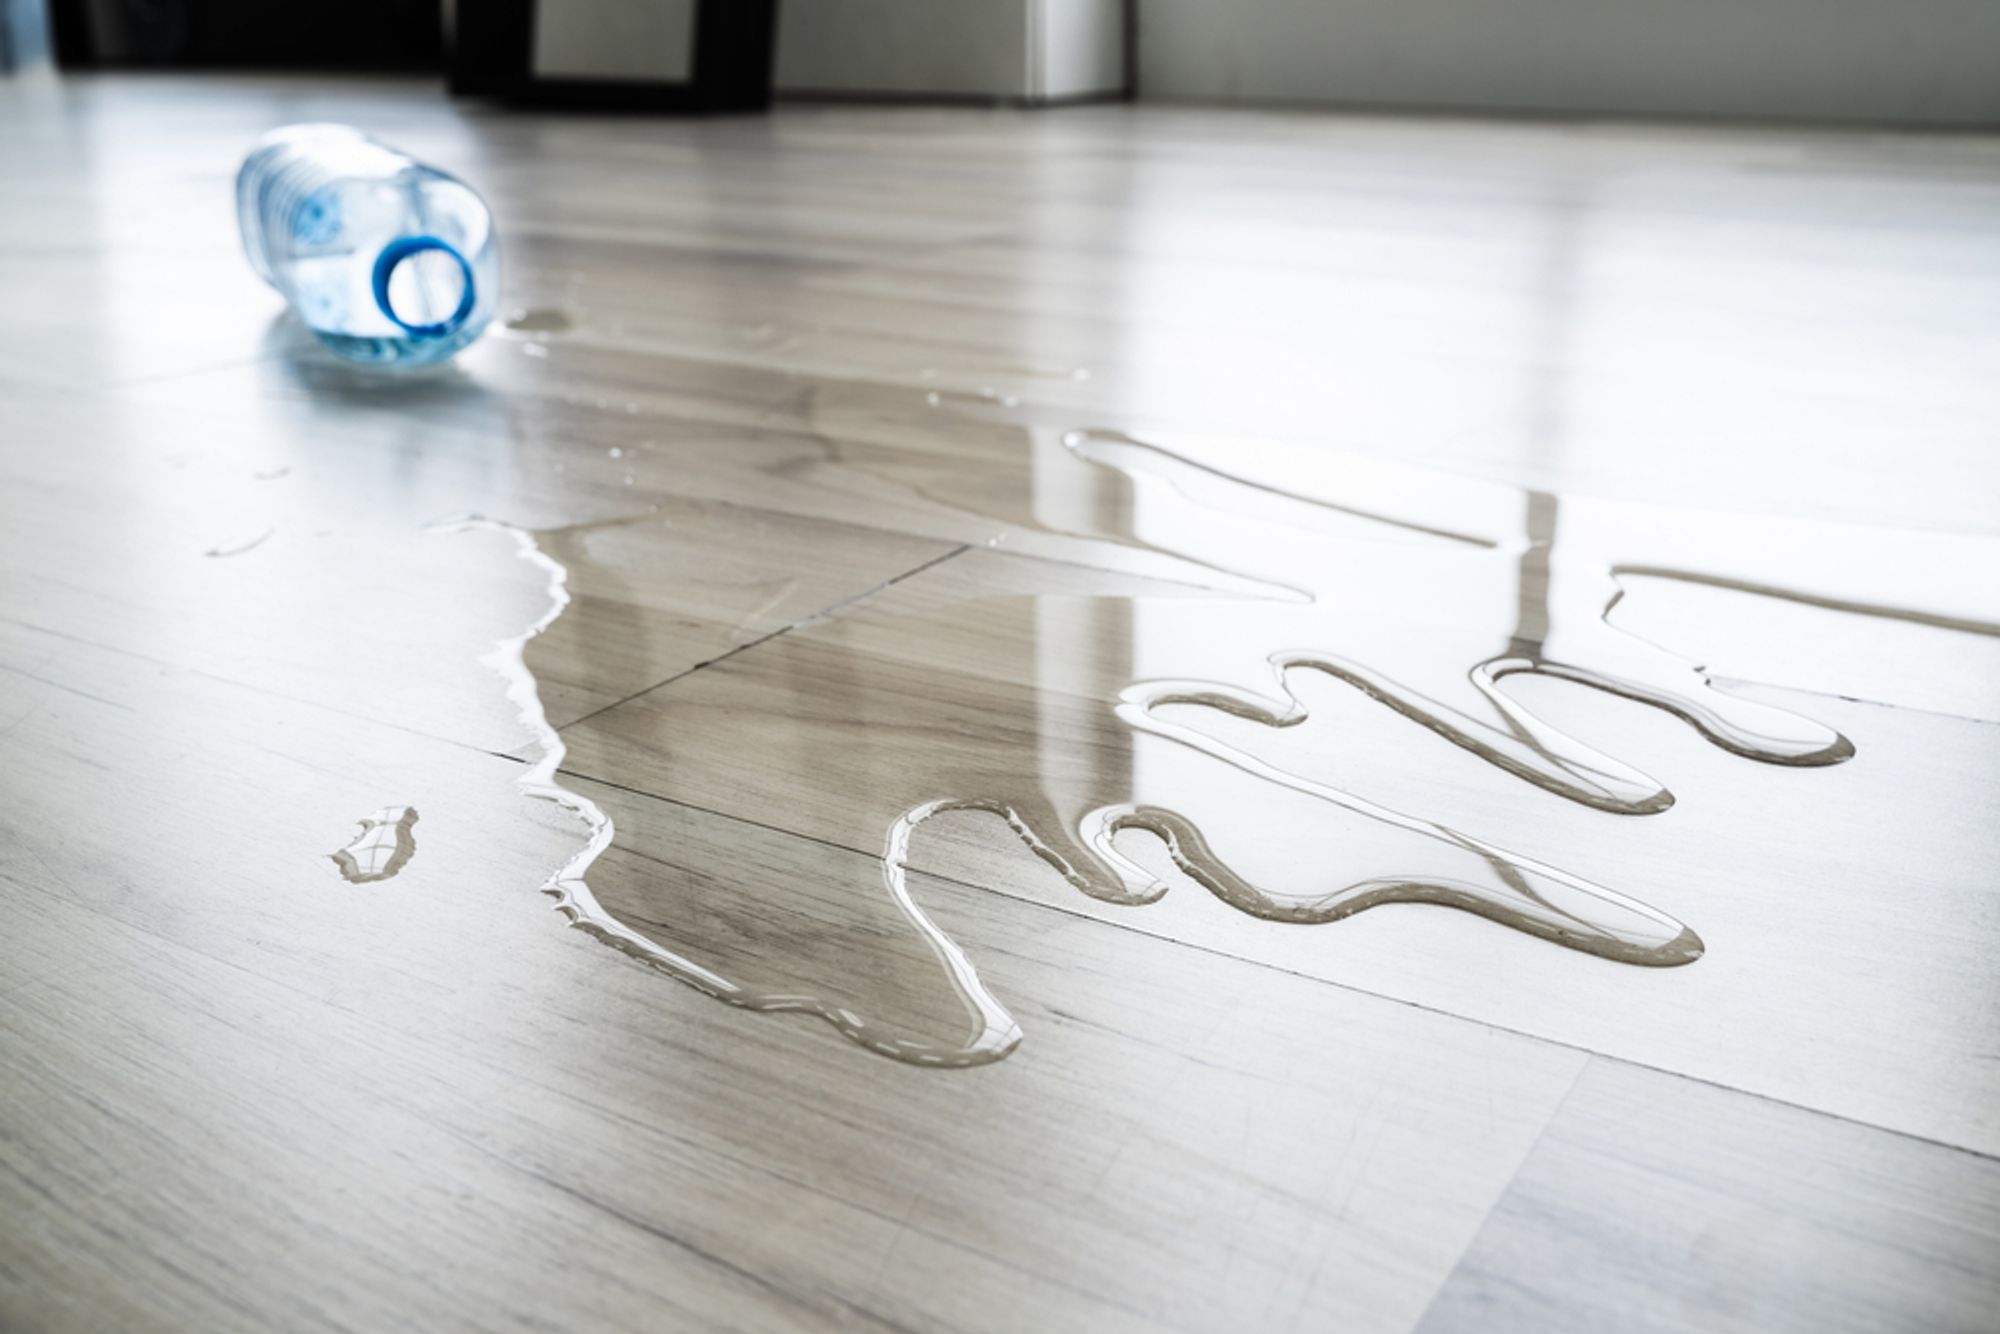 Water damage on luxury vinyl flooring 